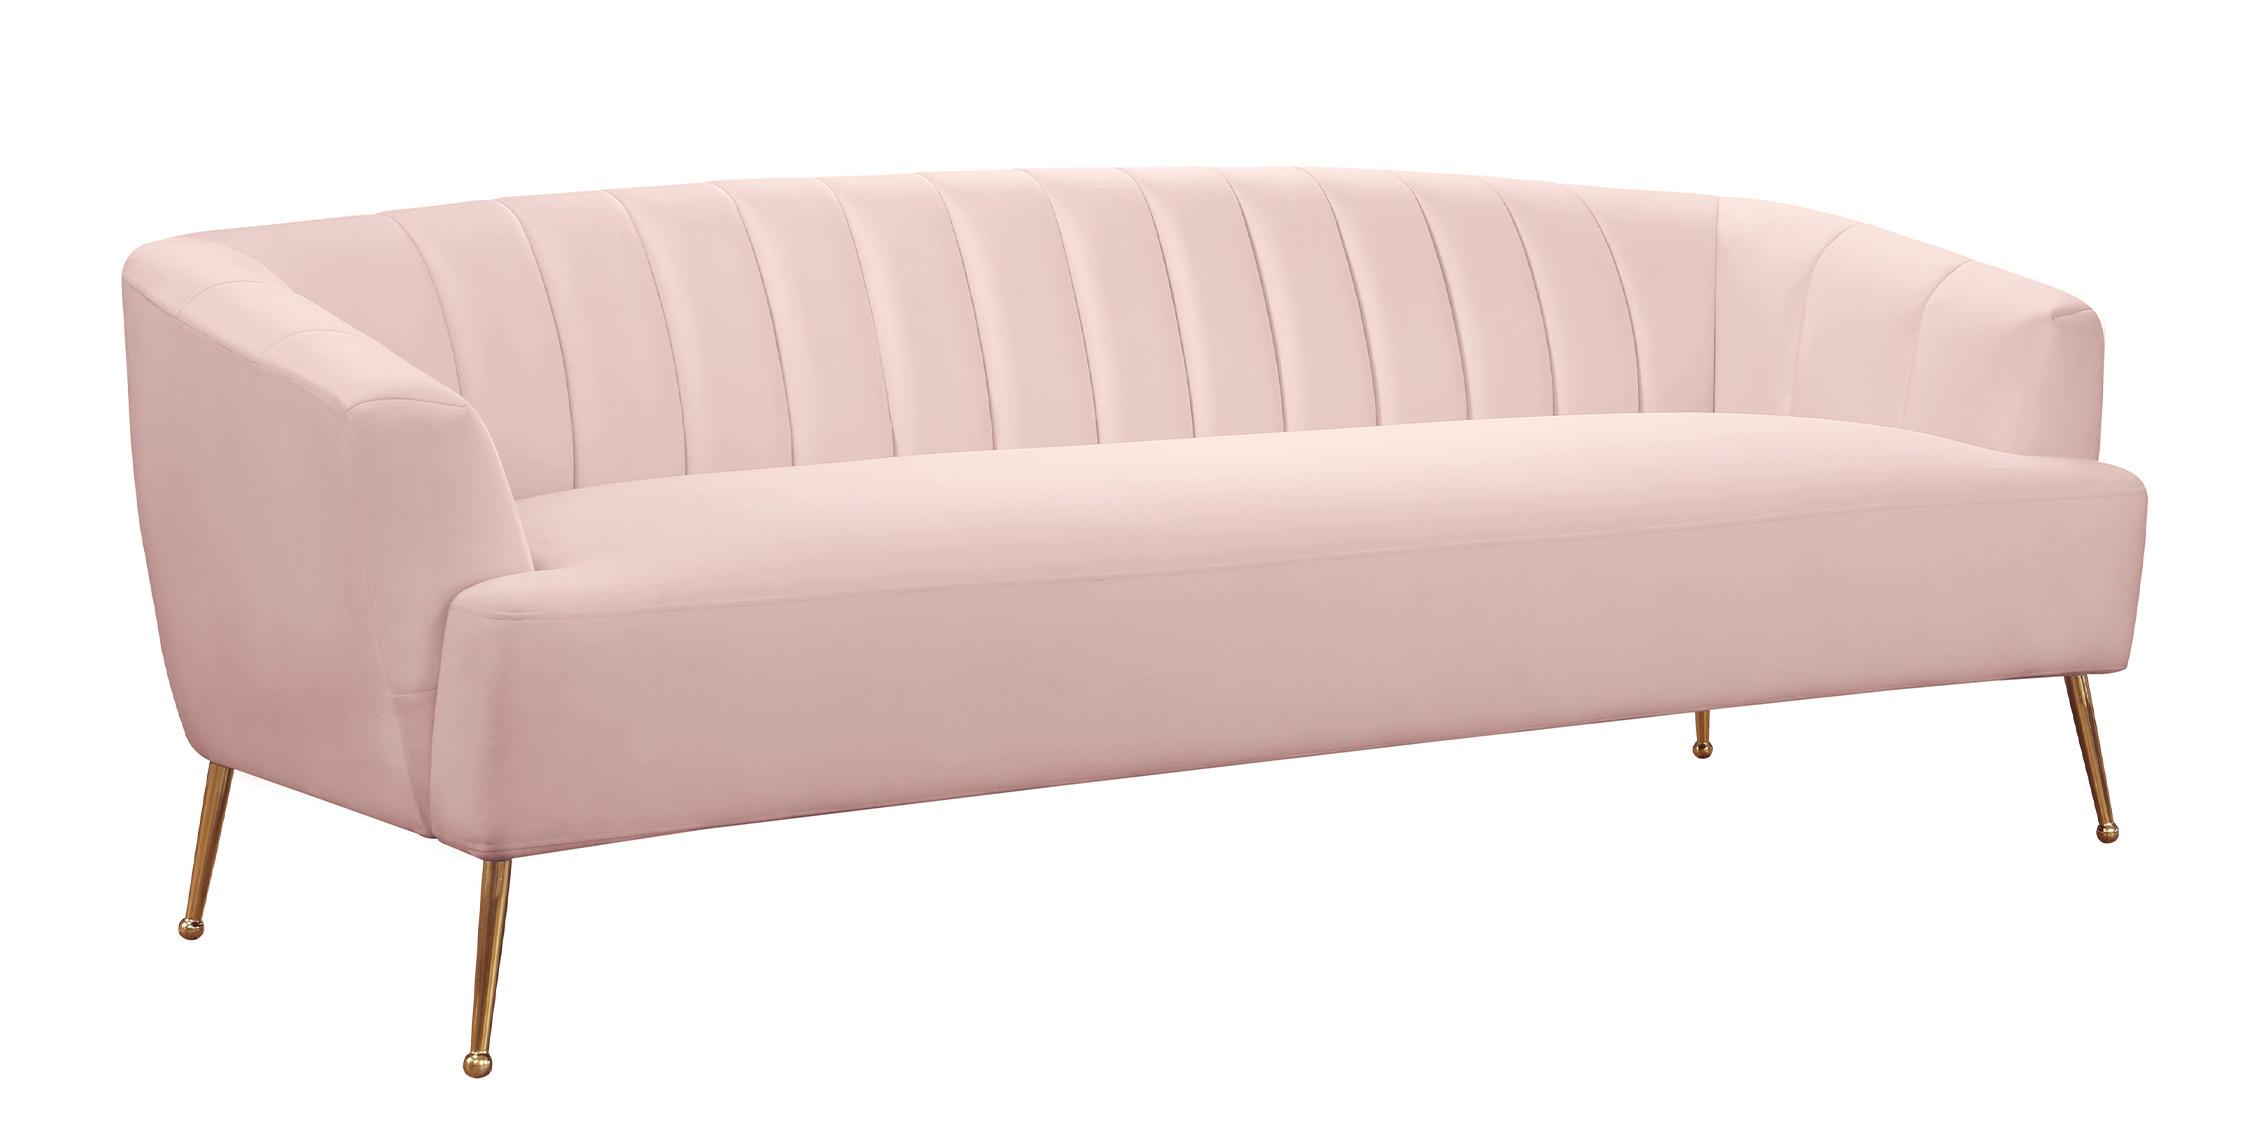 Contemporary, Modern Sofa TORI 657Pink-S 657Pink-S in Pink Velvet